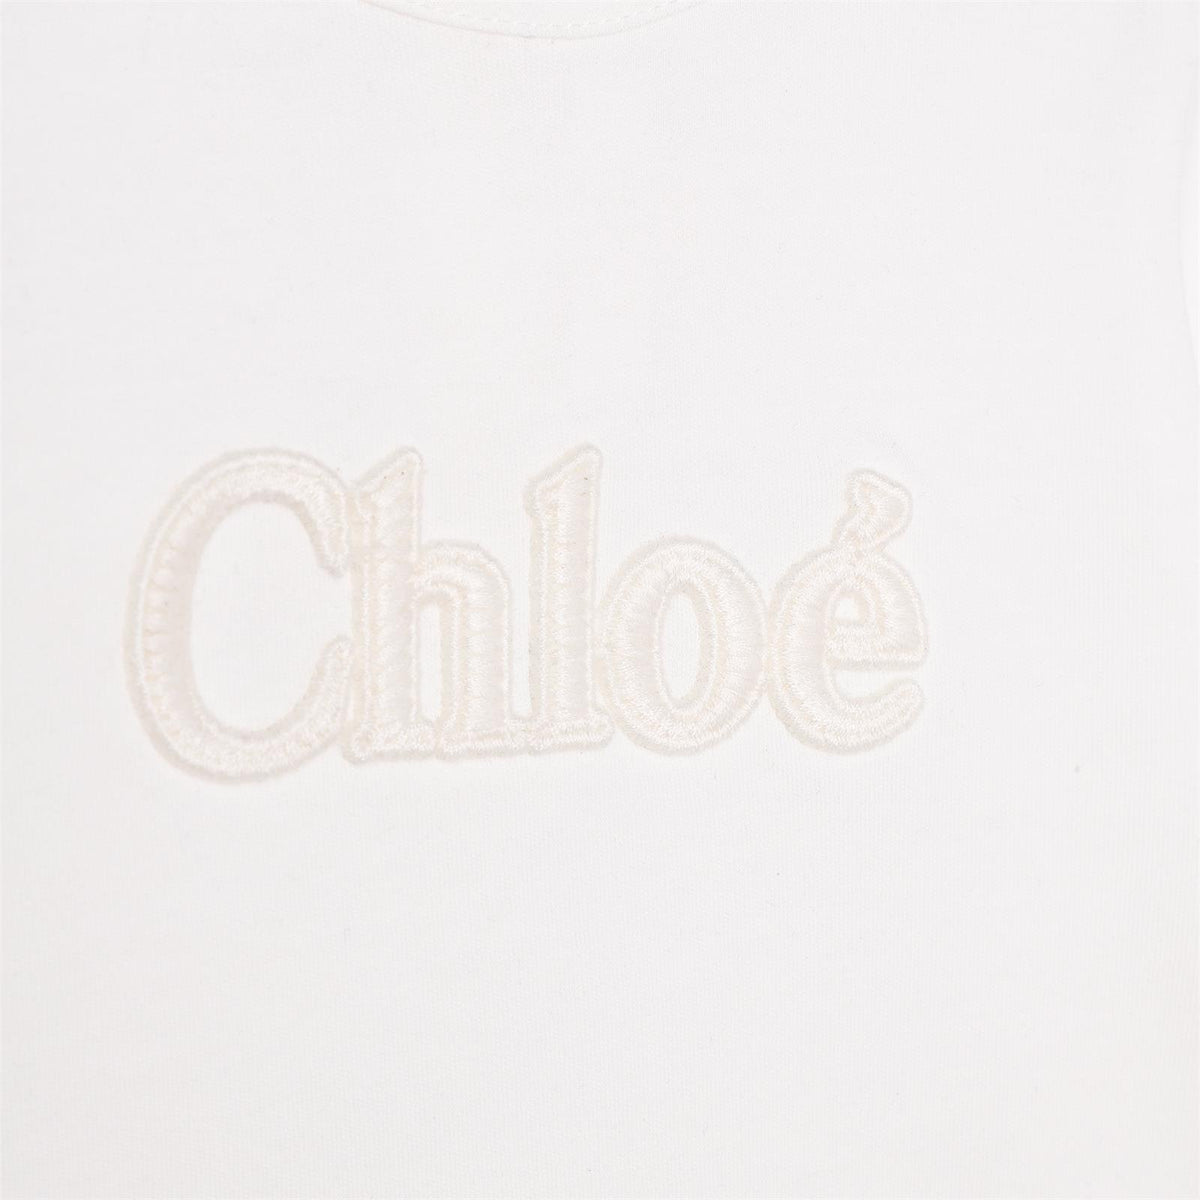 Baby Long-Sleeve Shirt with Chloe Logo